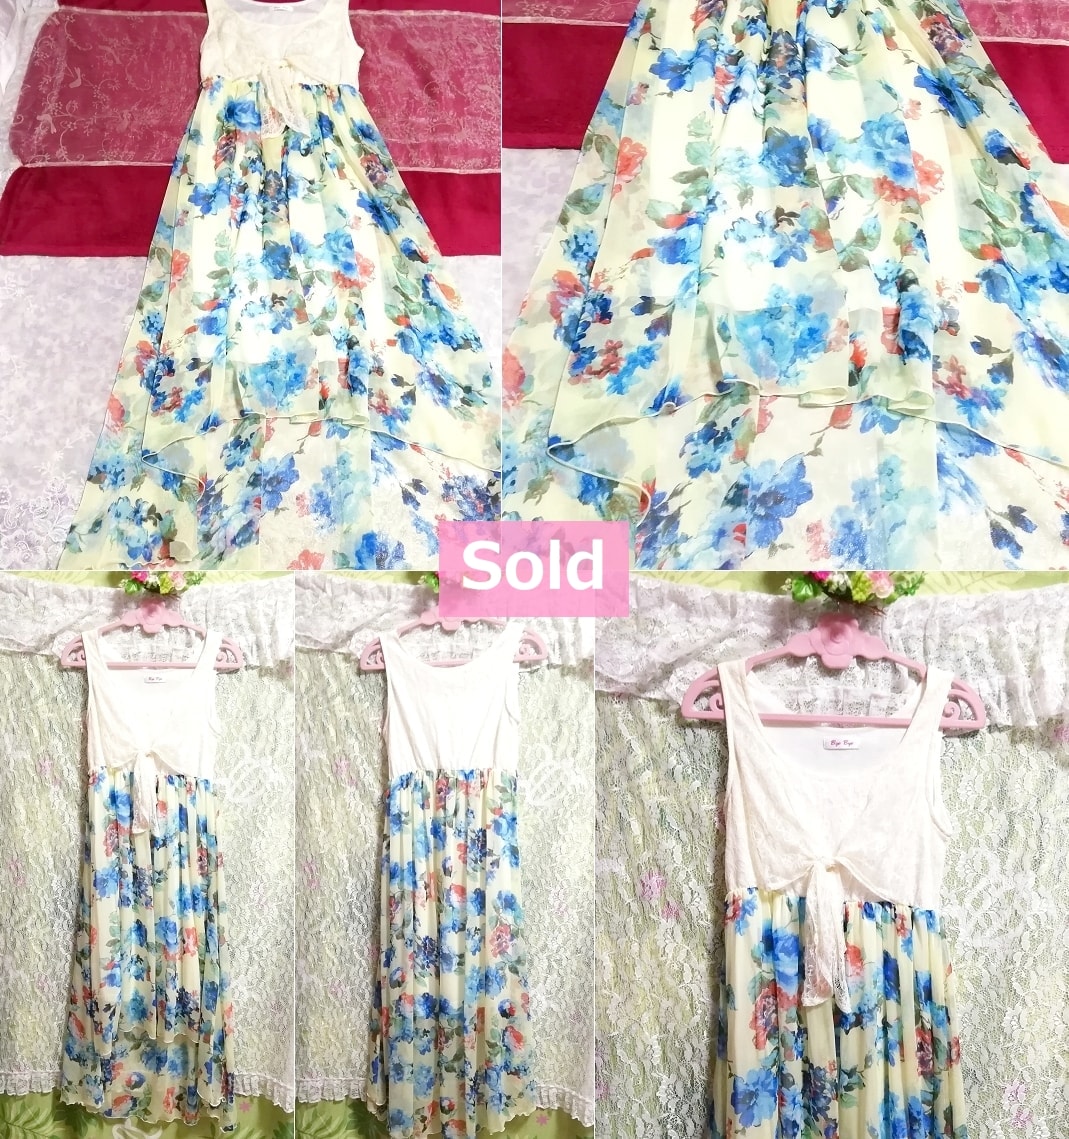 Blue floral pattern white lace chiffon flare skirt maxi onepiece dress